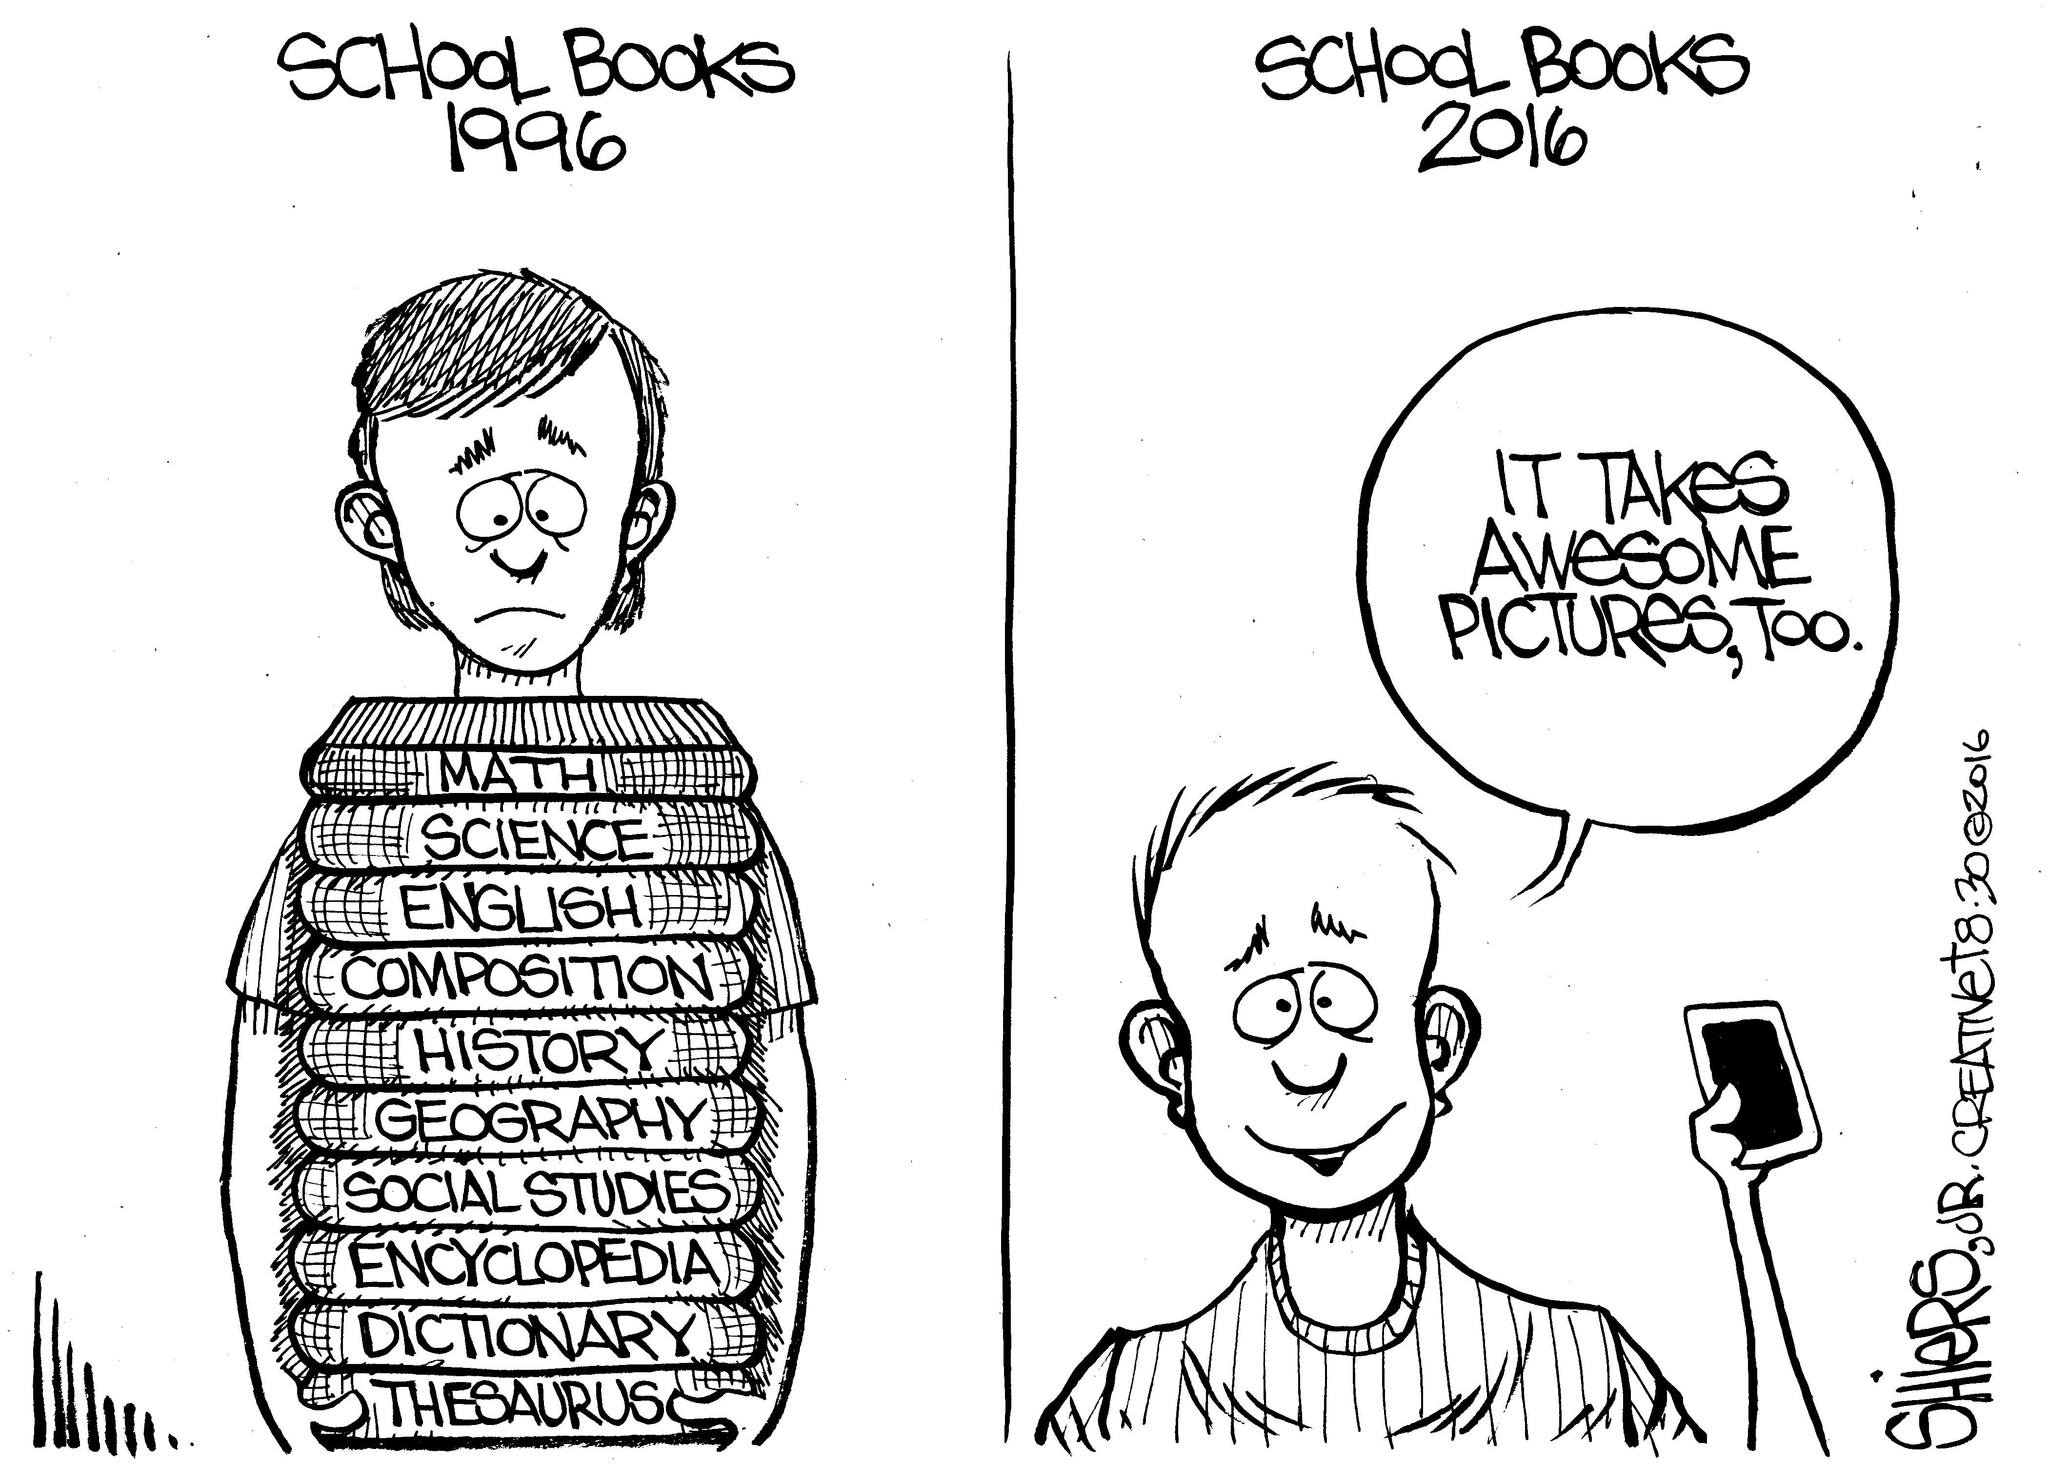 School books in 1996 and 2016 | Cartoon